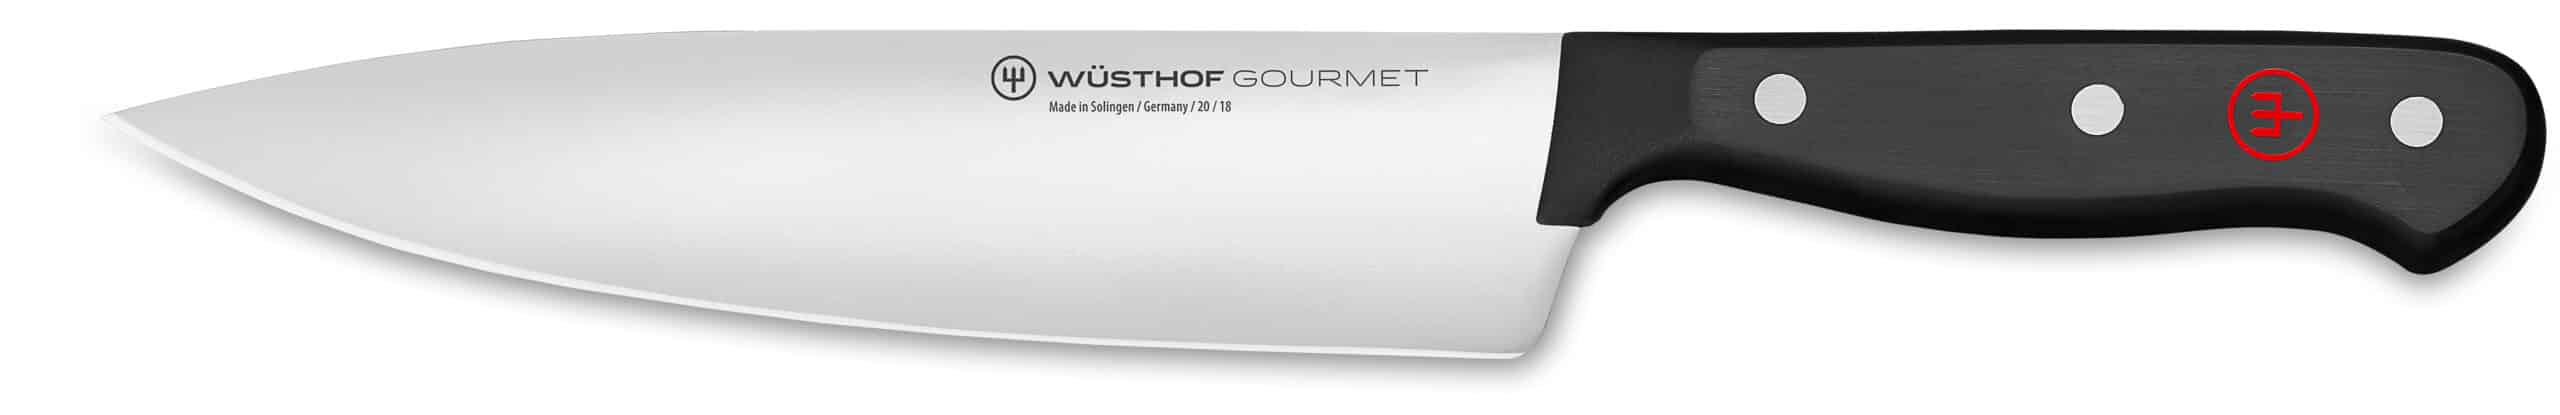 Wusthof Gourmet Cook's Knife 18cm